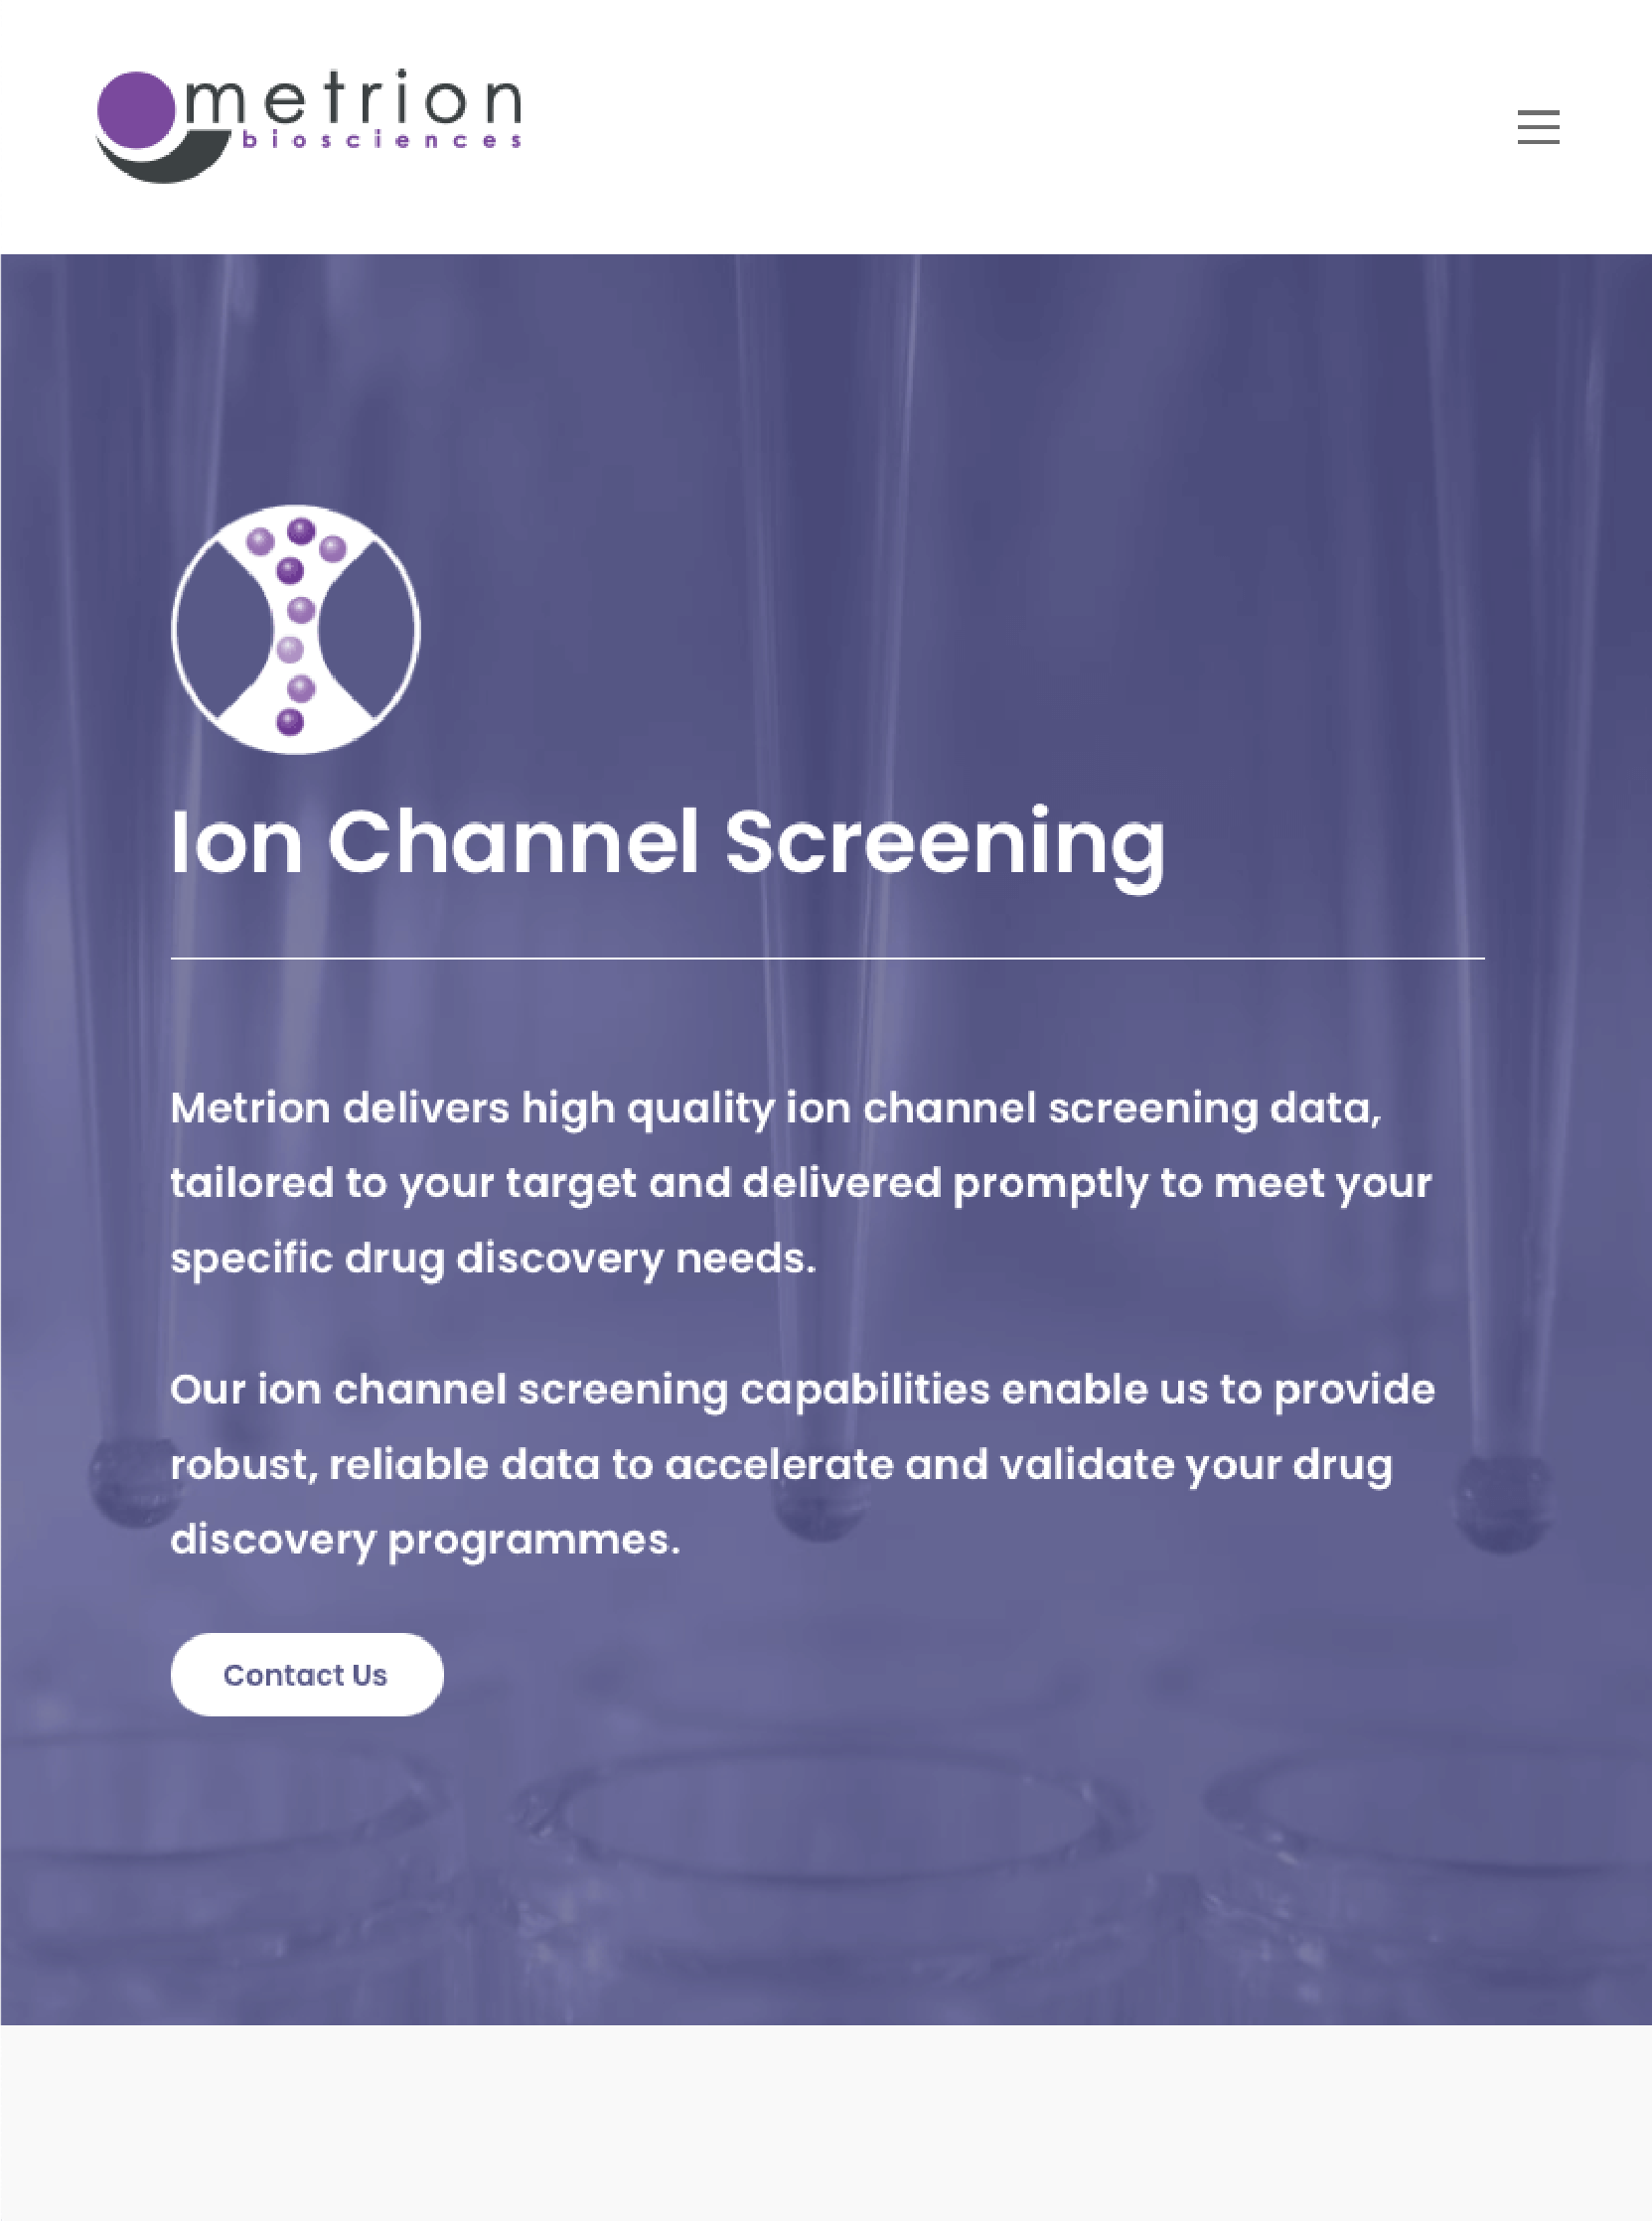 Metrion Biosciences Ion Channel Screening Website by Peek Creative Limited